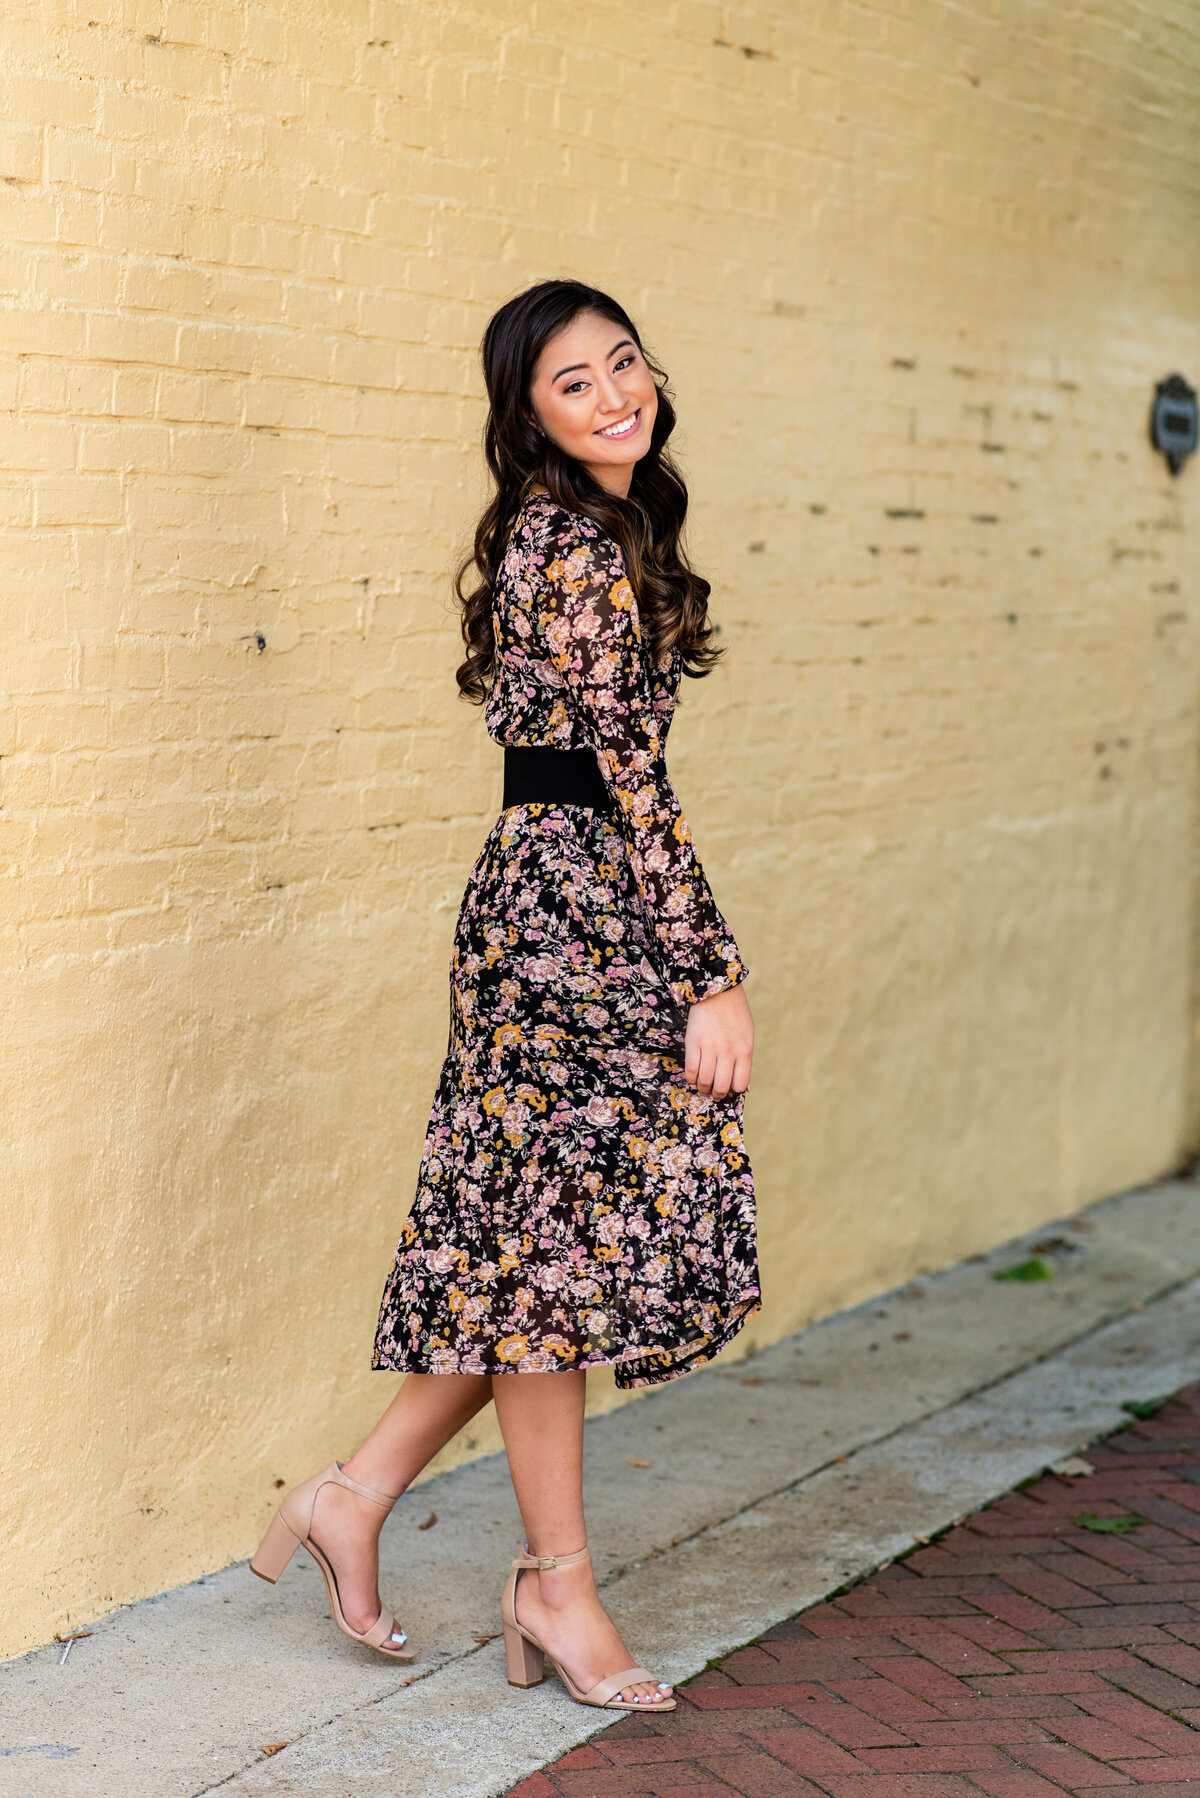 Richmond, VA senior girl poses on sidewalk in Uptown Richmond, VA wearing floral dress.